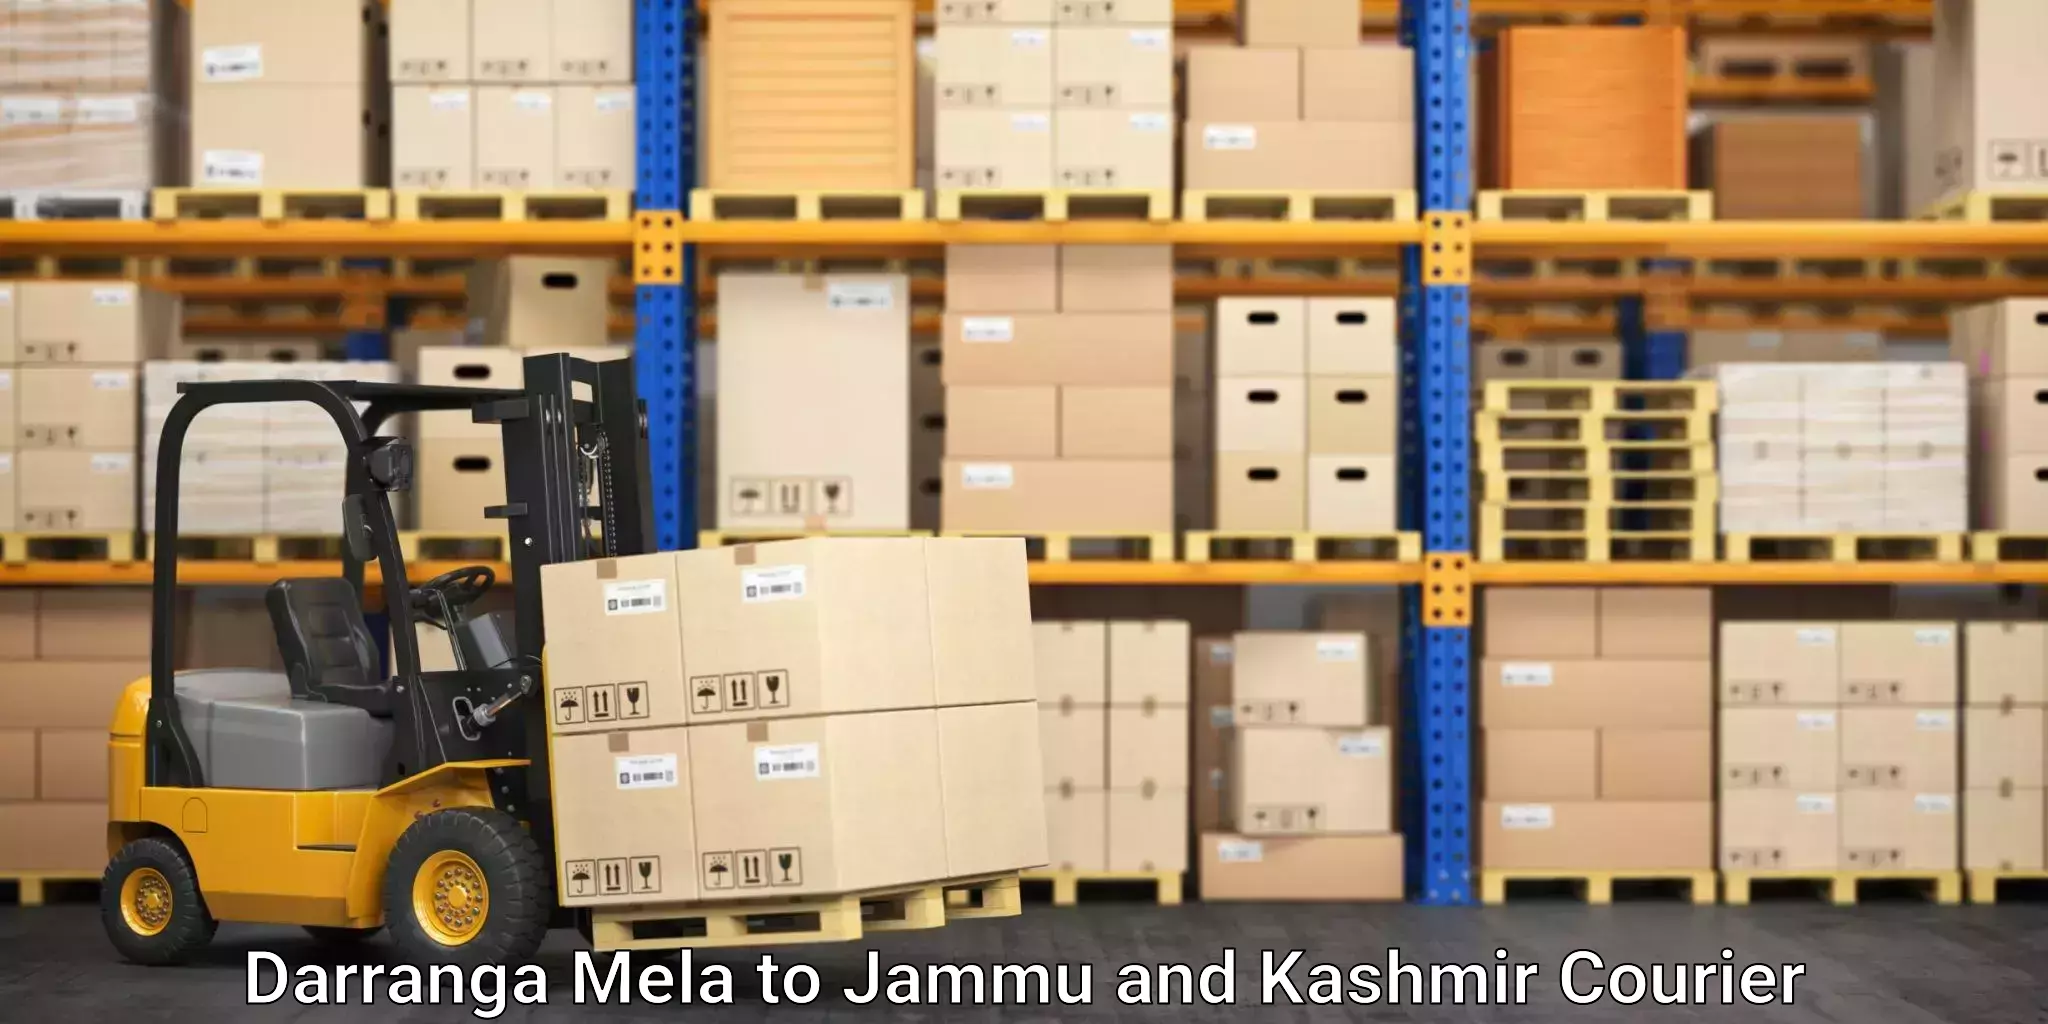 Tech-enabled shipping Darranga Mela to Anantnag